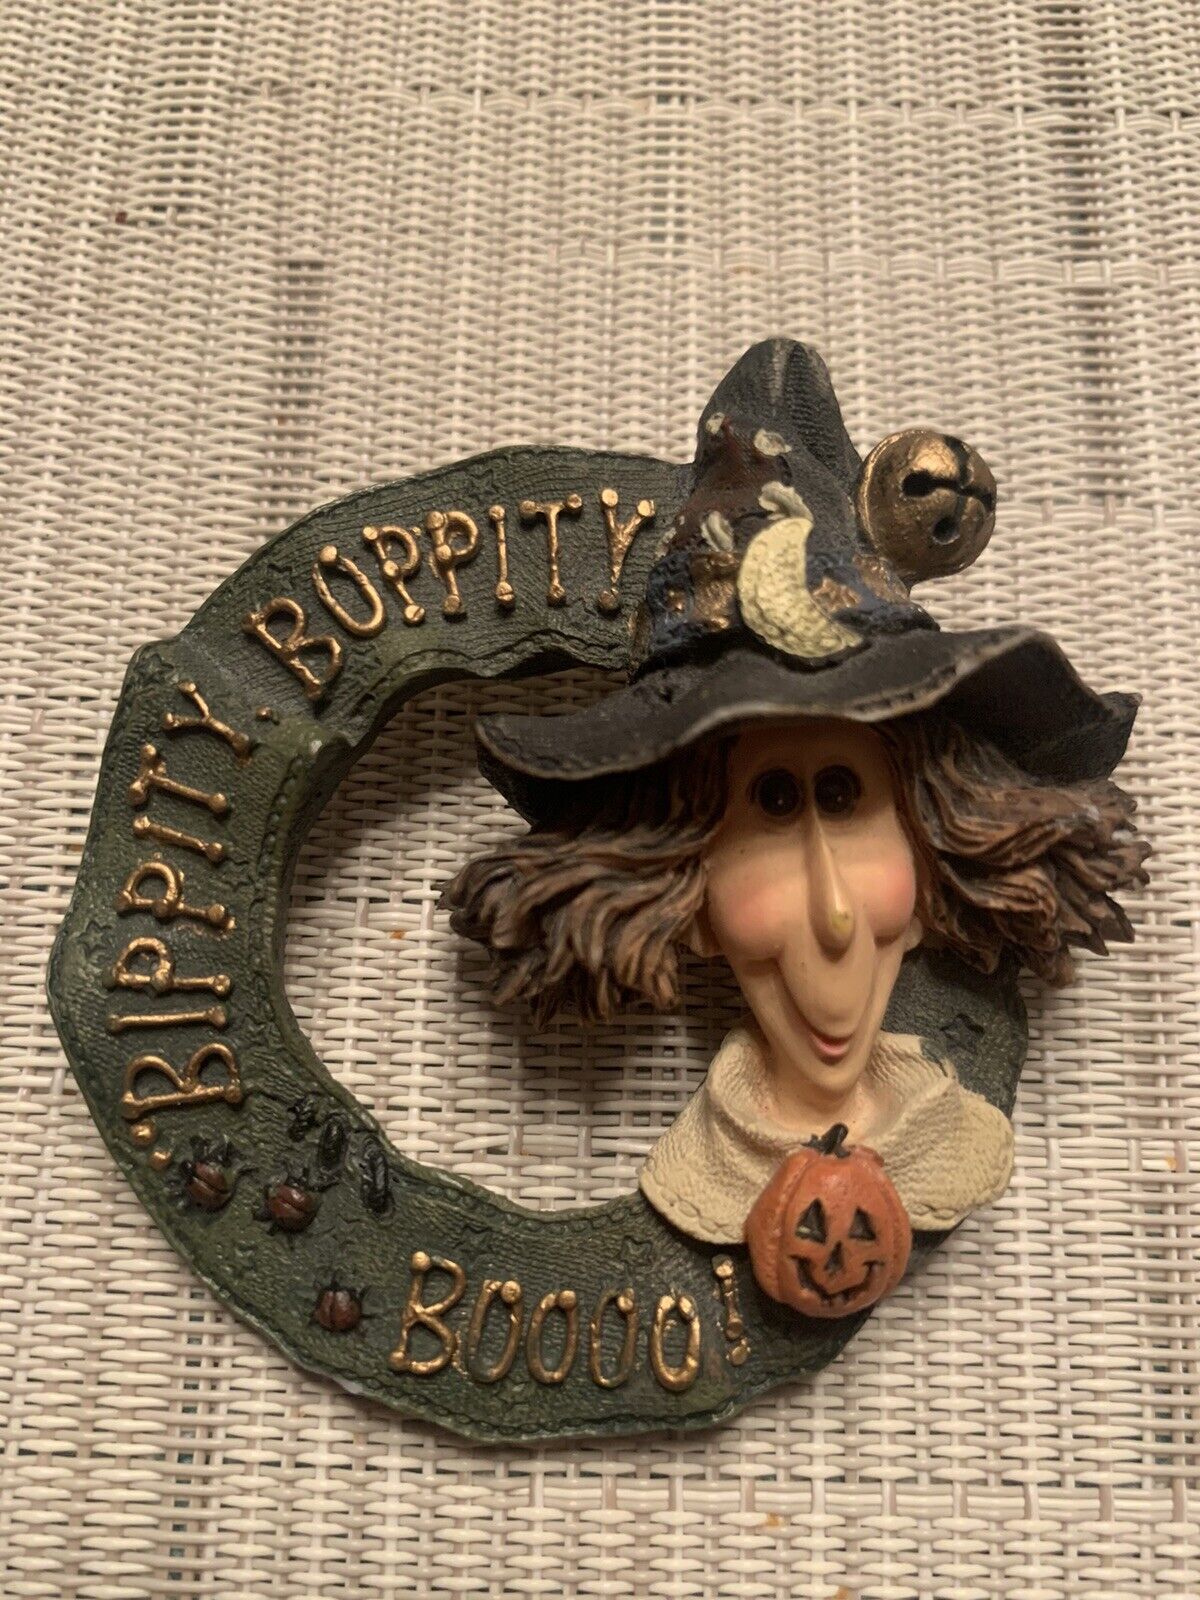 Vintage Boyds Bear Brooch Pin Halloween Witch Bippity Boppity Boo 